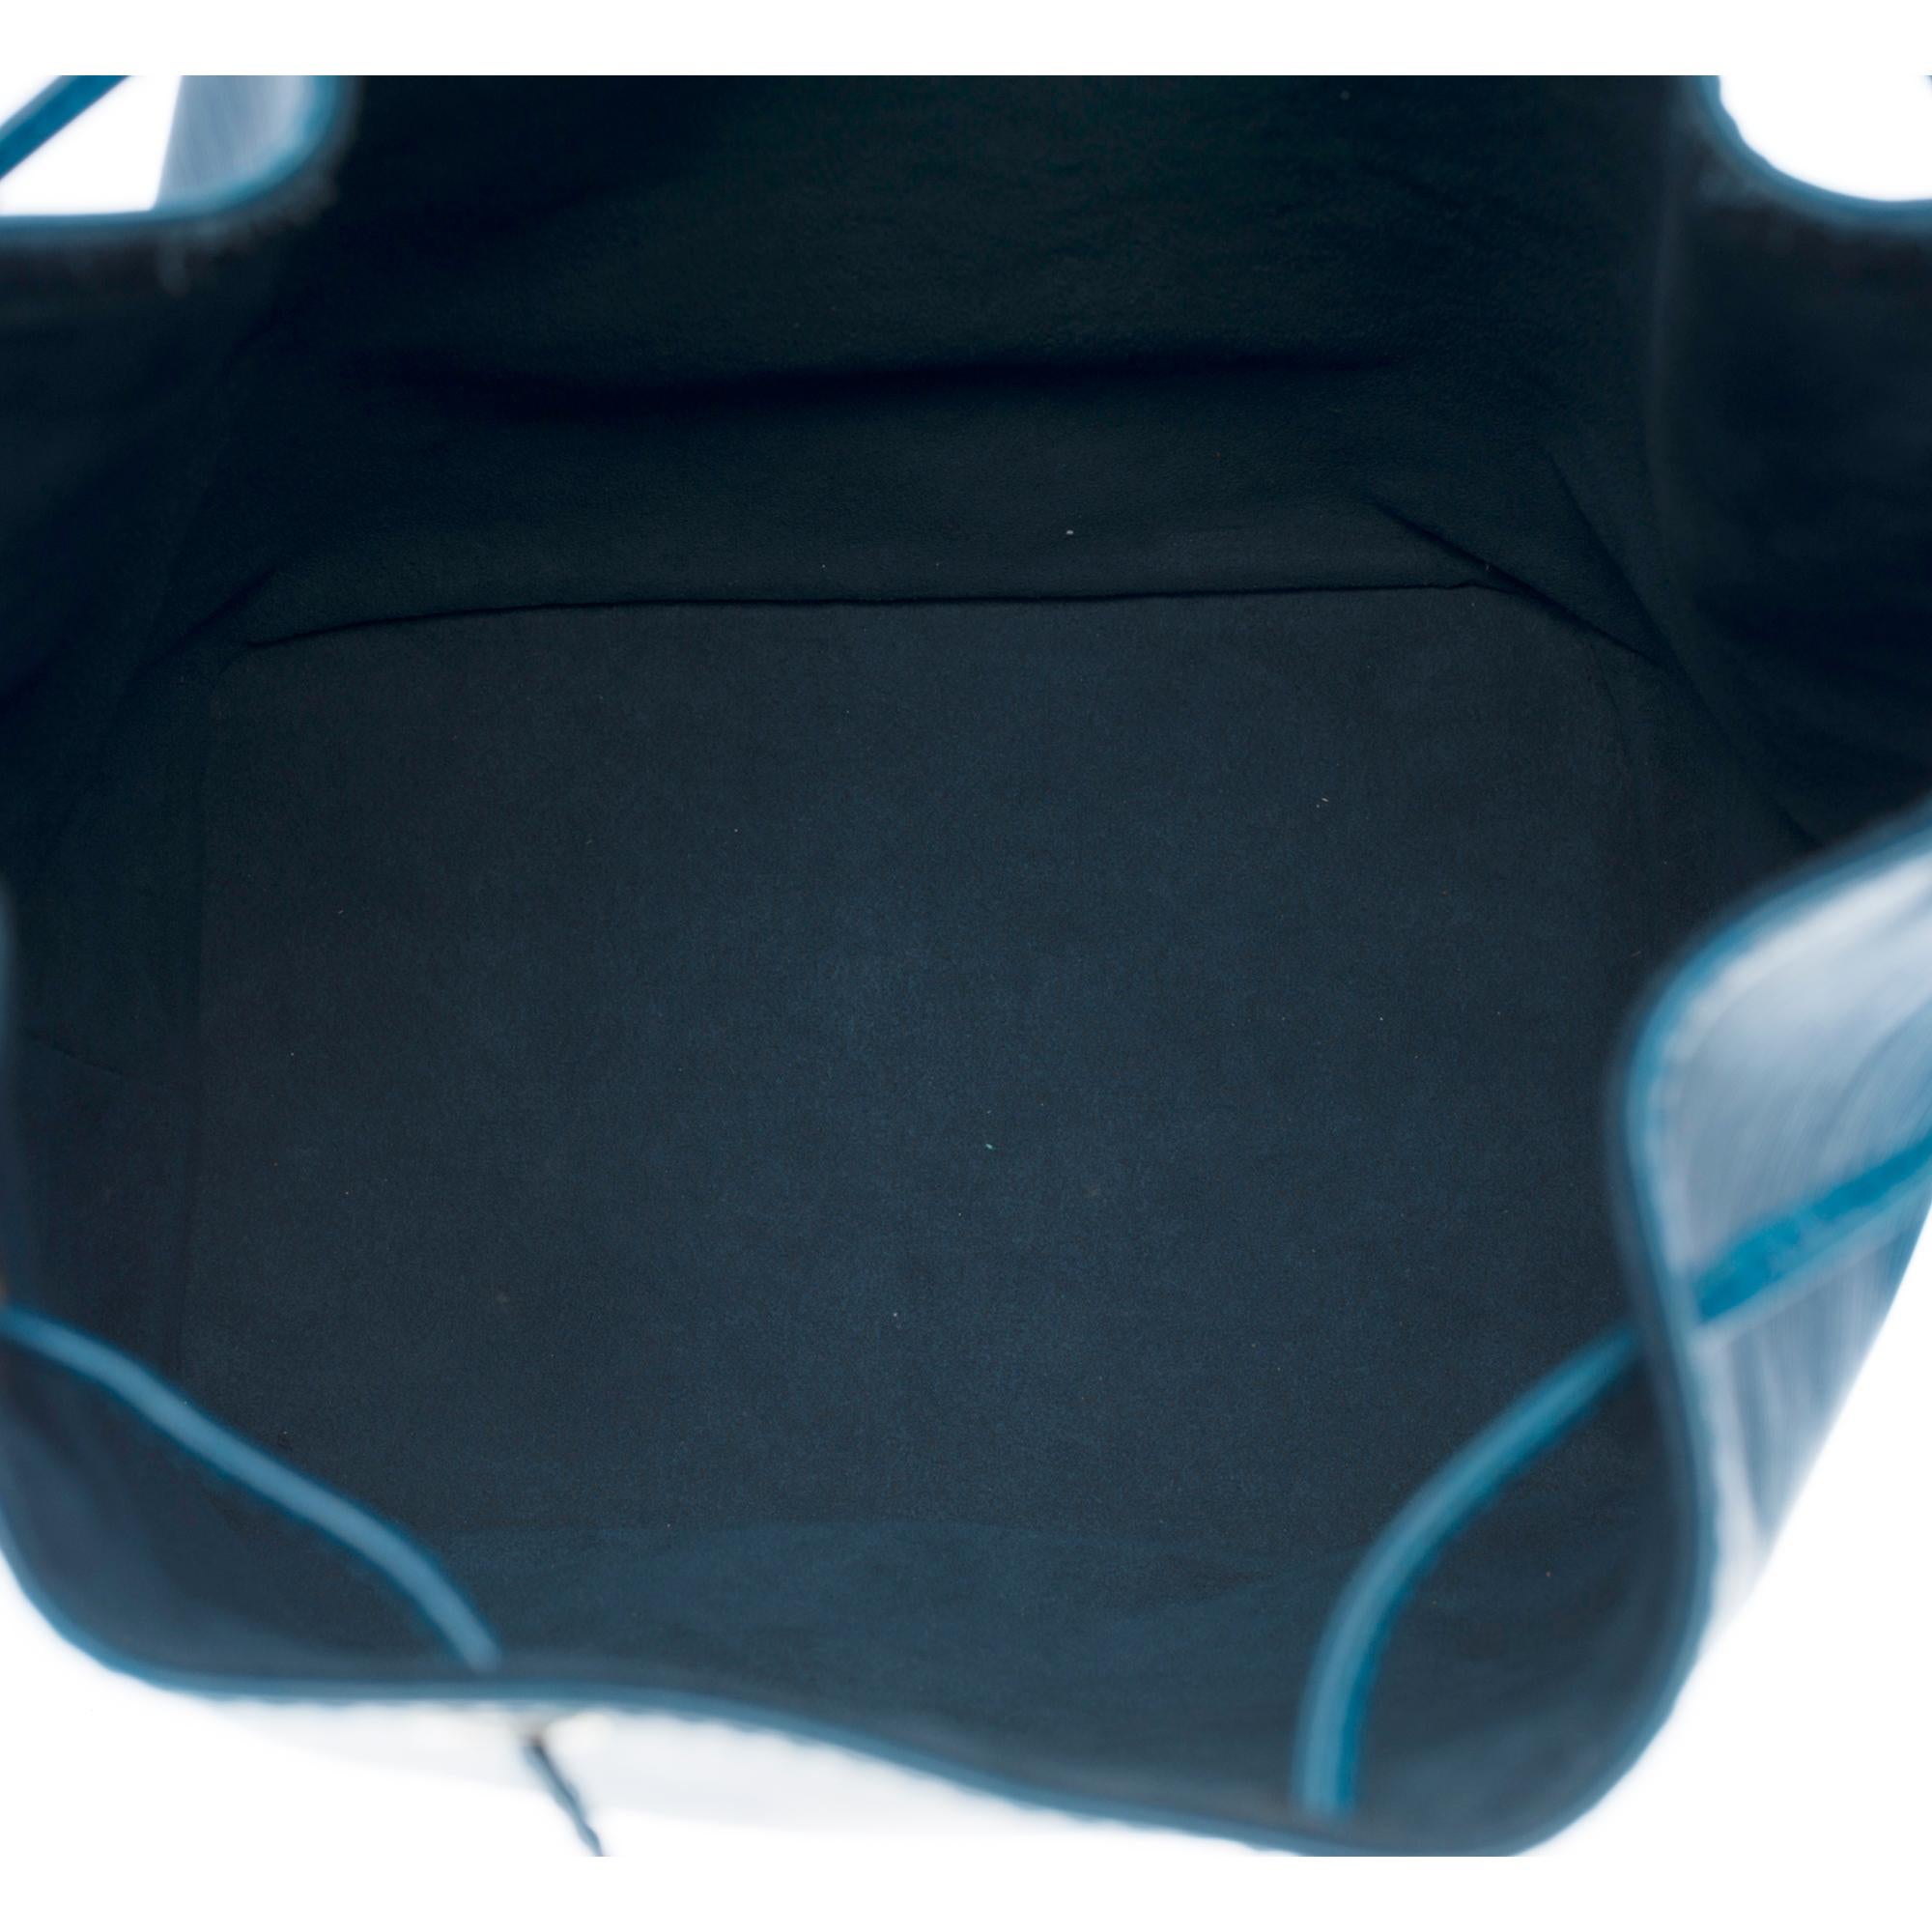 Louis Vuitton Noé Grand modele shoulder bag in blue epi leather with GHW 2